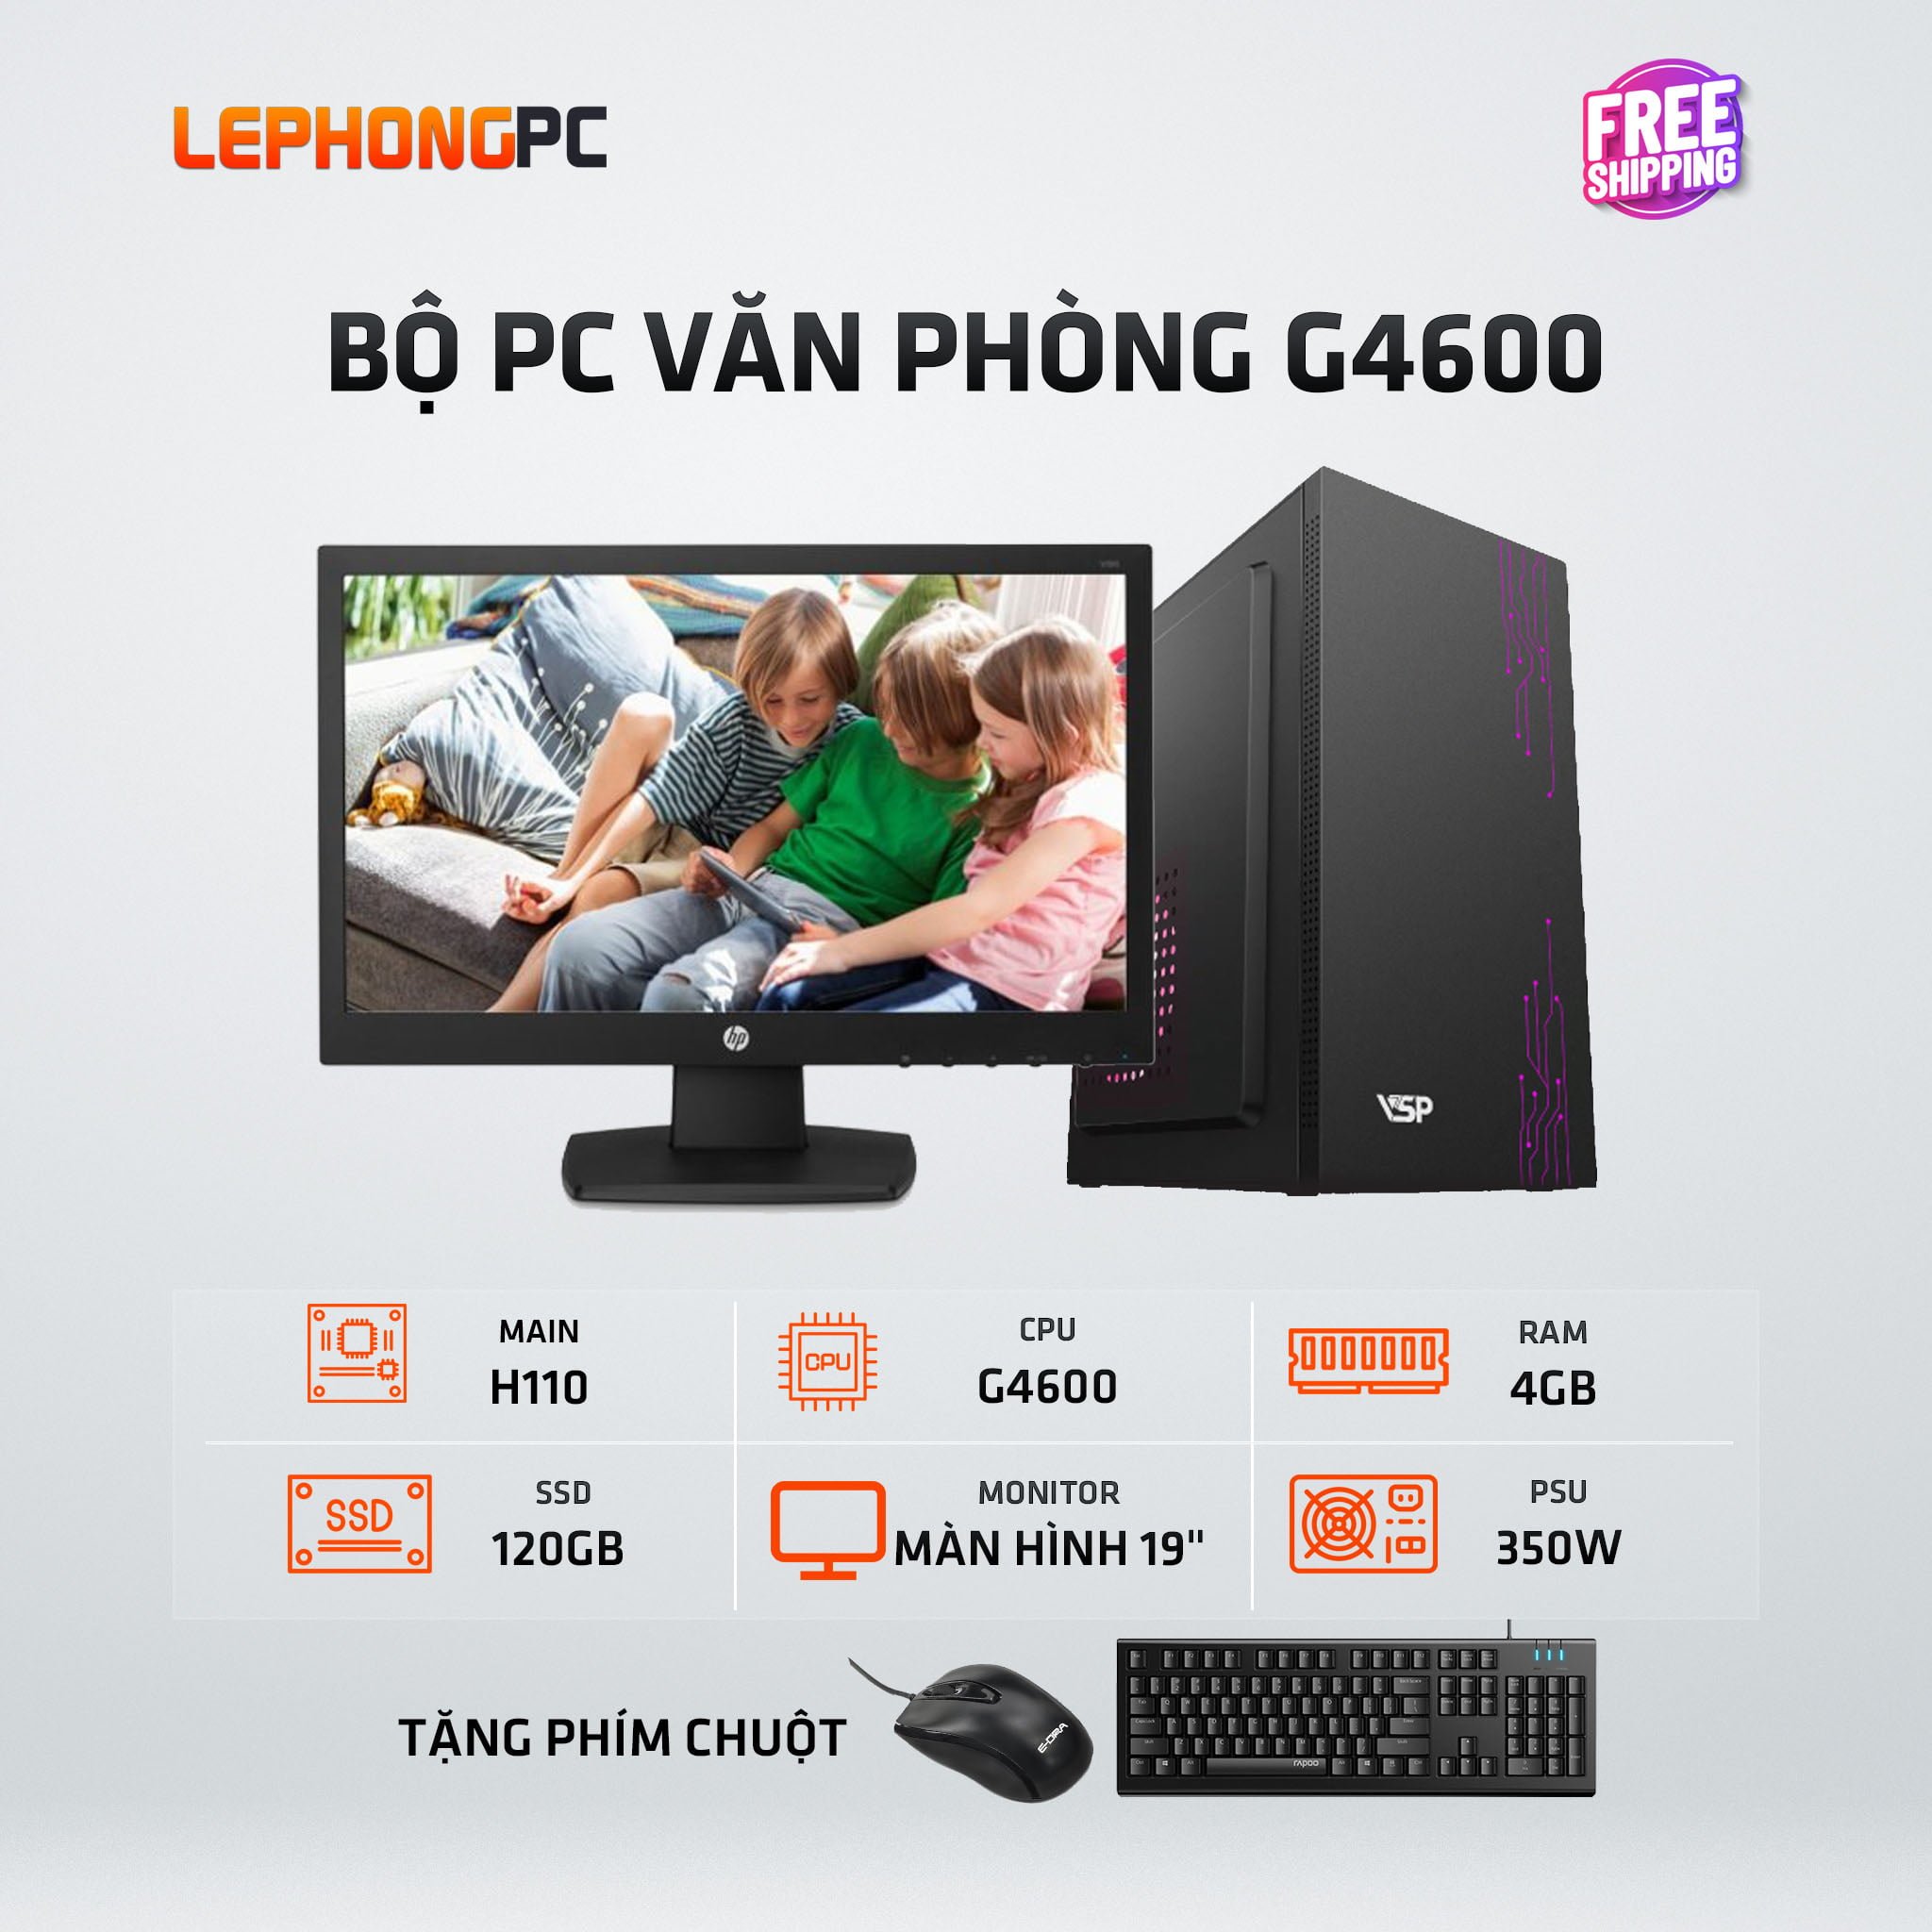 BO PC VAN PHONG G4600